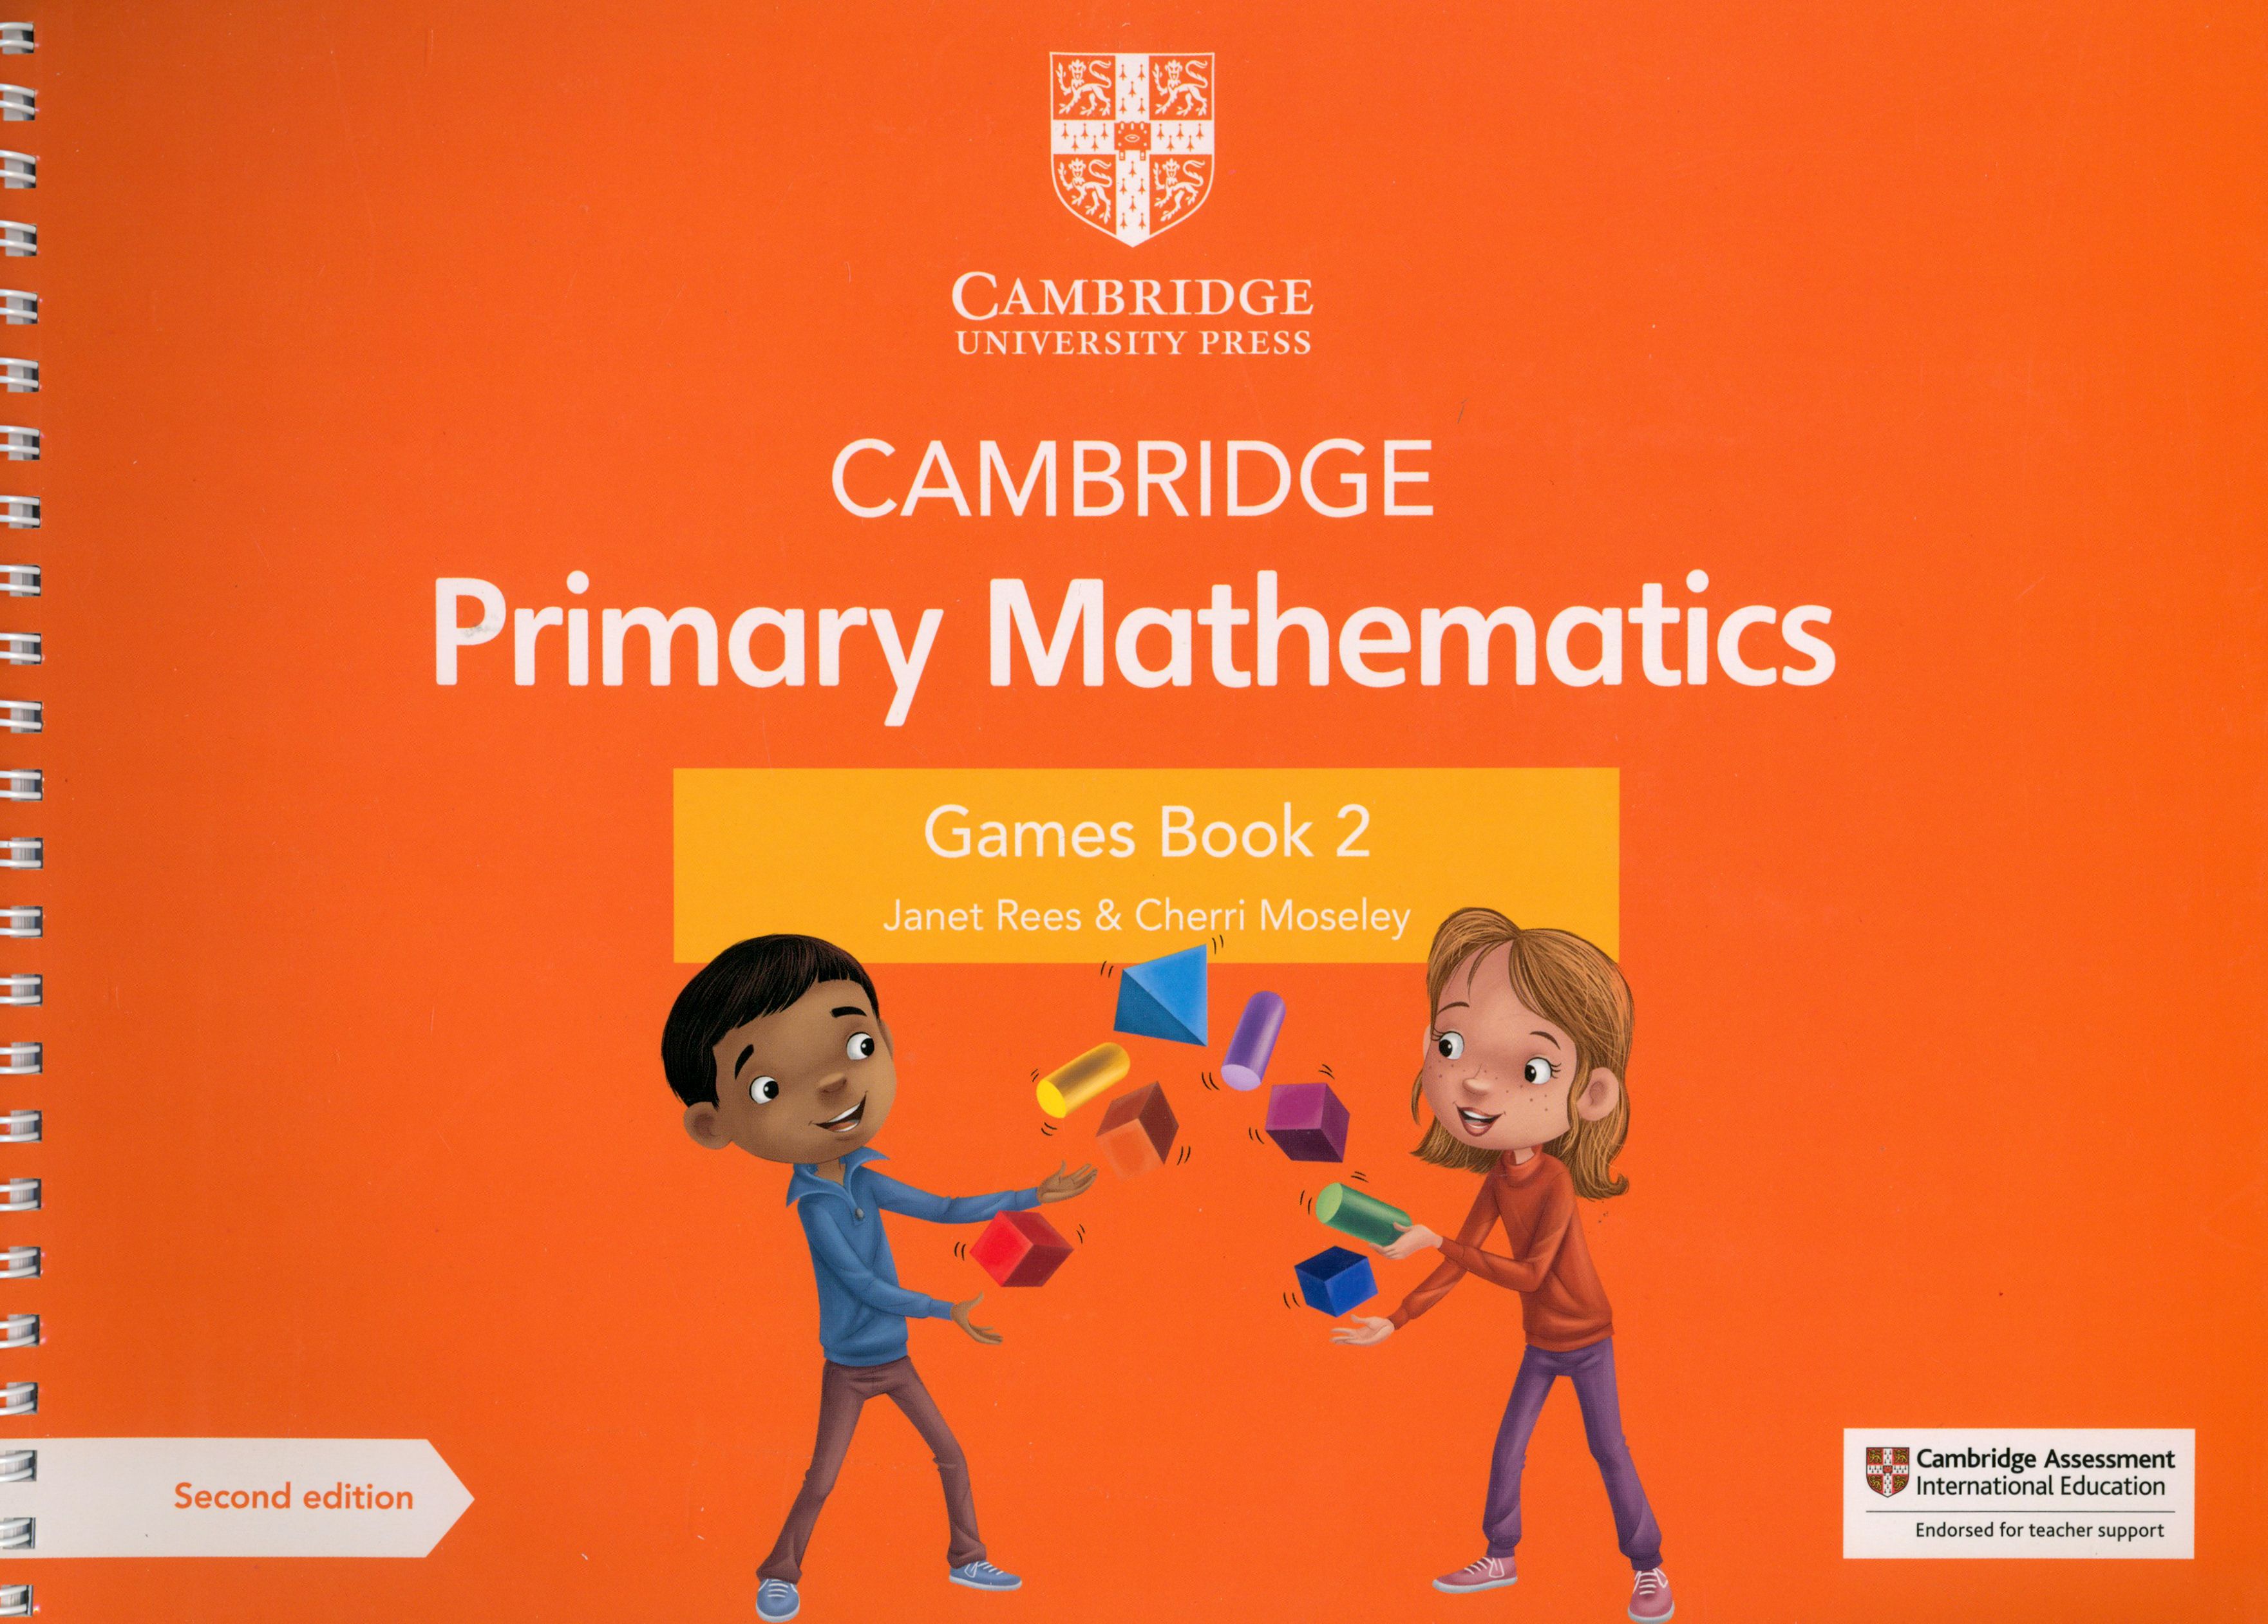 Cambridge mathematics